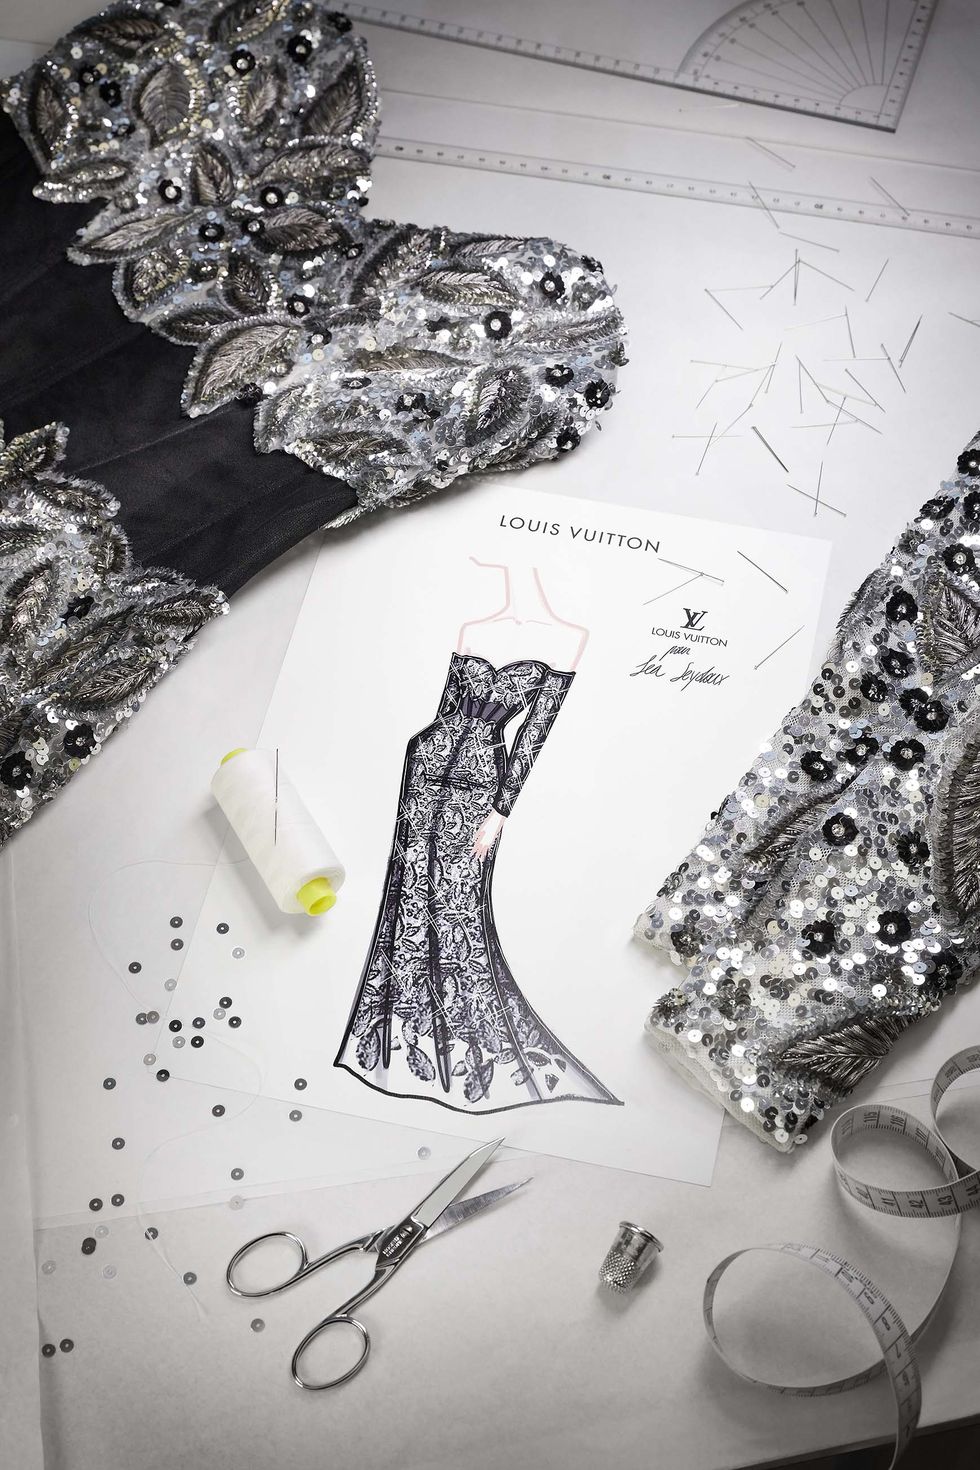 BAFTA 2022 Film Awards: Léa Seydoux wears glitzy black and silver sequinned  Louis Vuitton gown